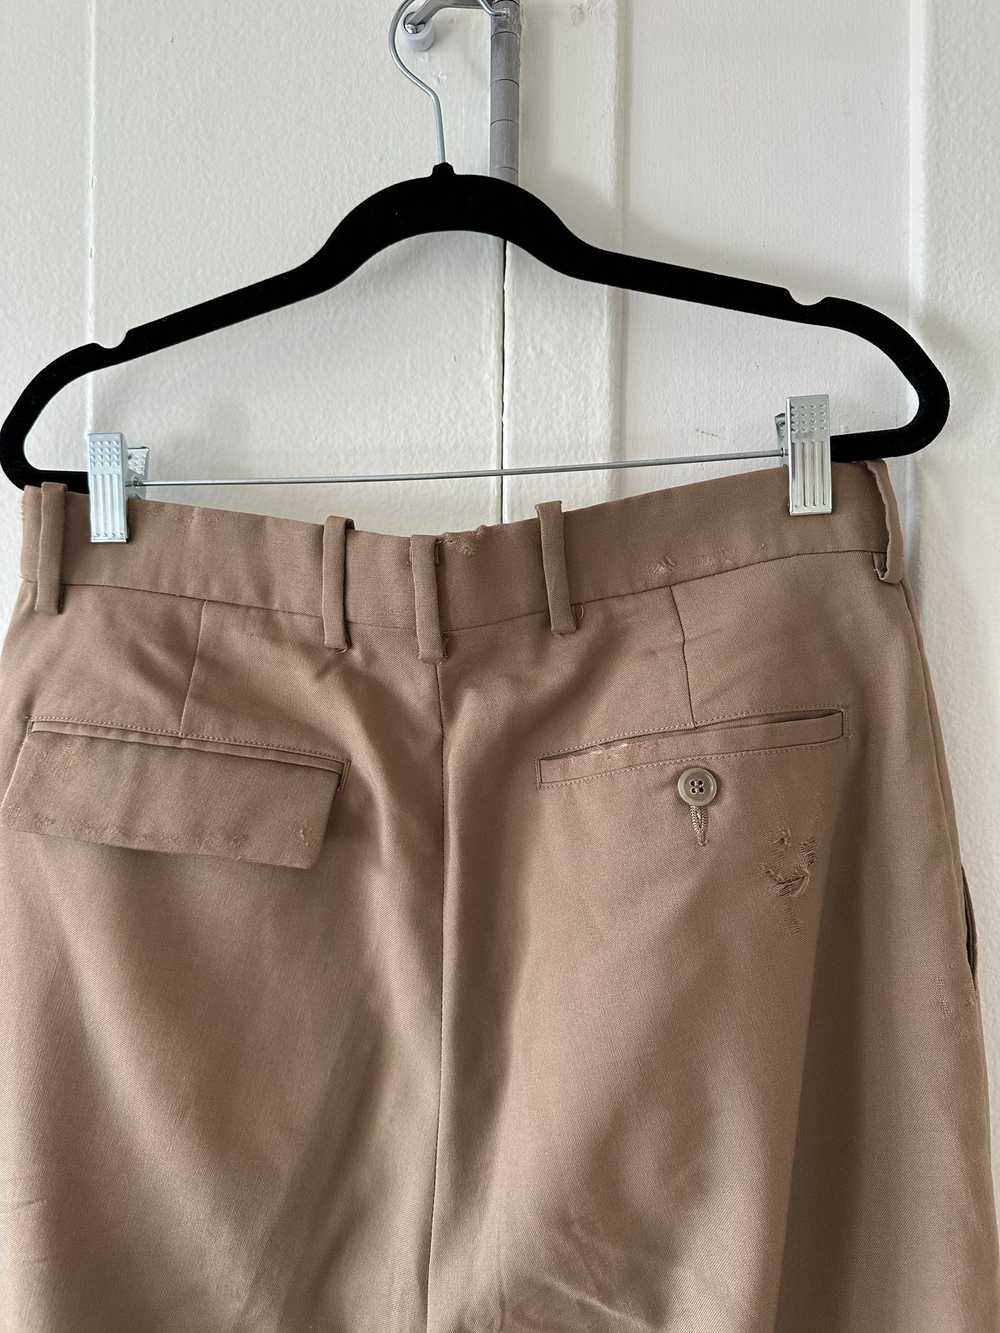 Marni Marni Pleated Trousers - image 5